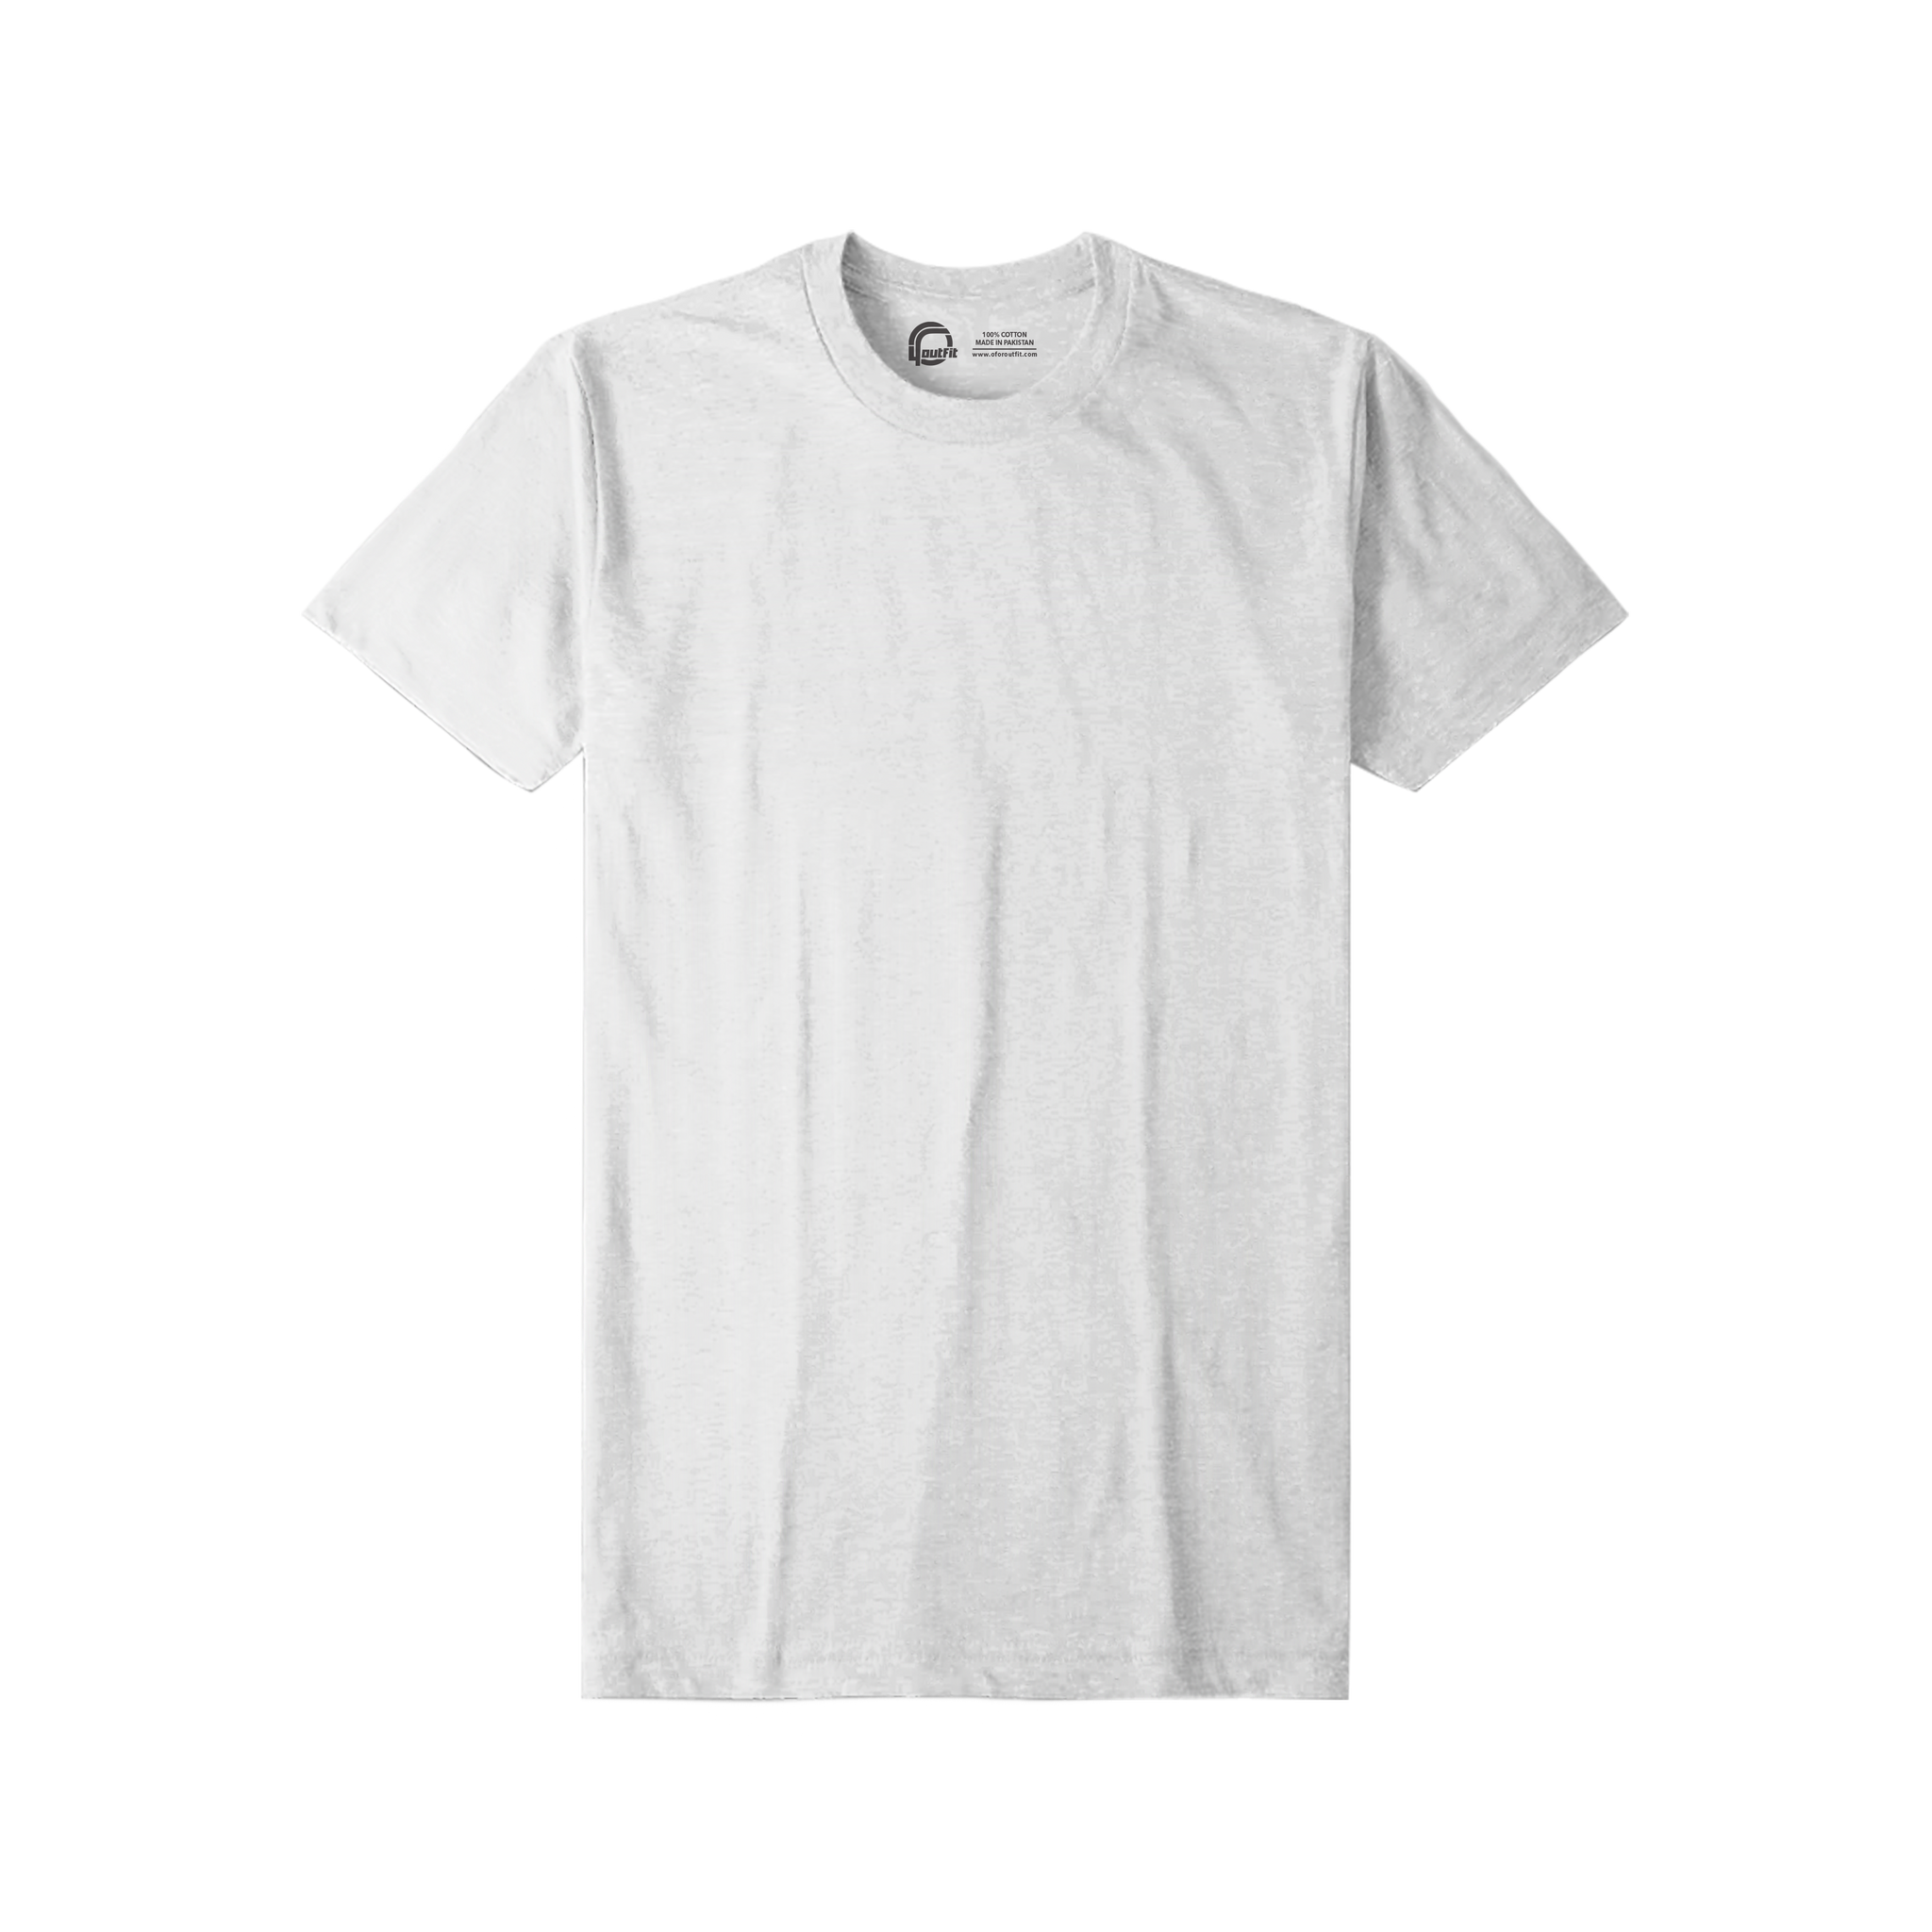 White - Basic T-Shirts